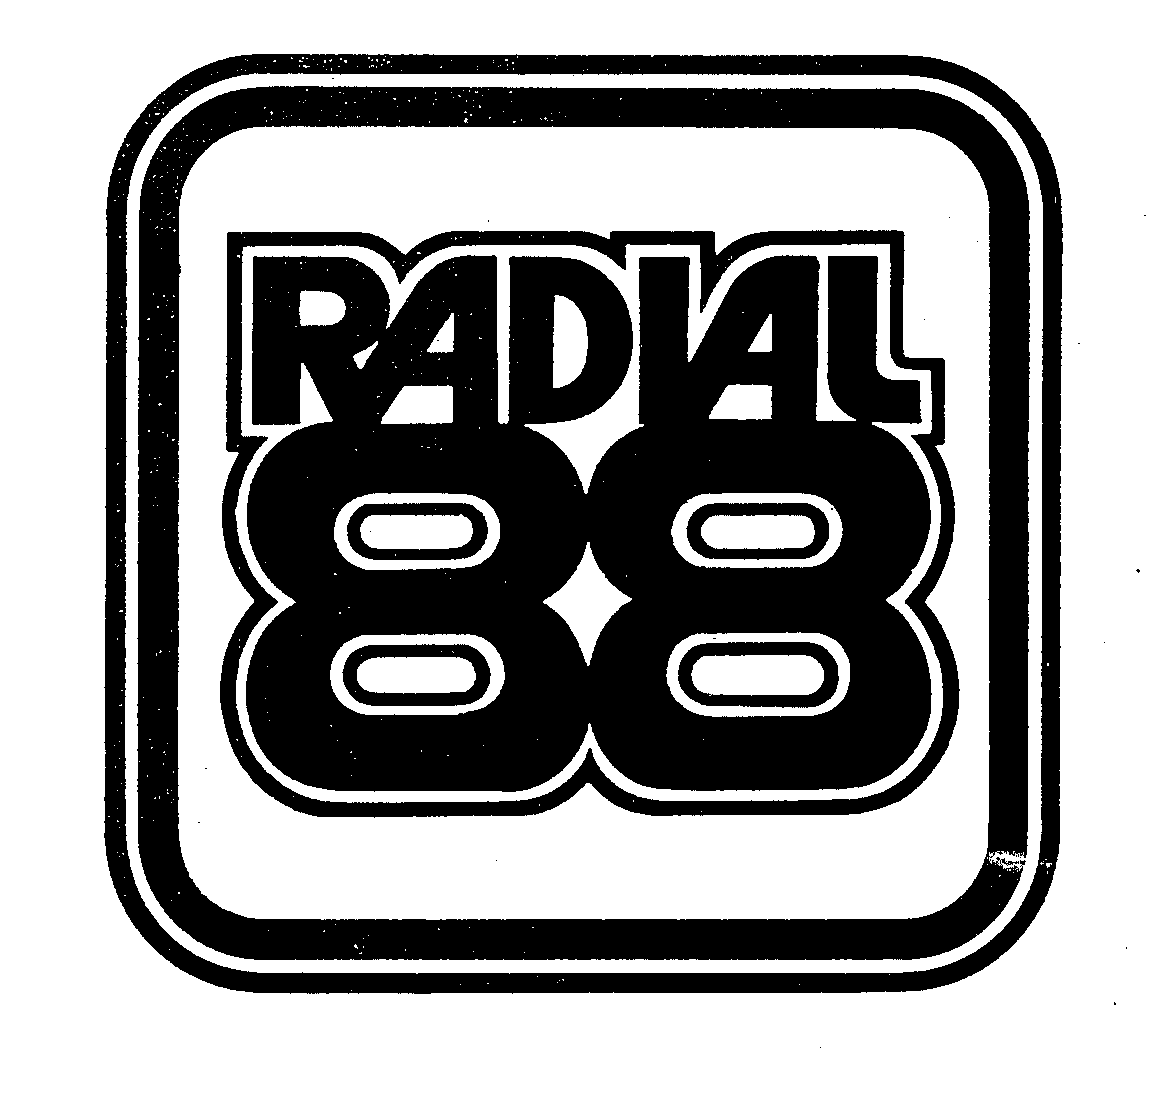  RADIAL 88